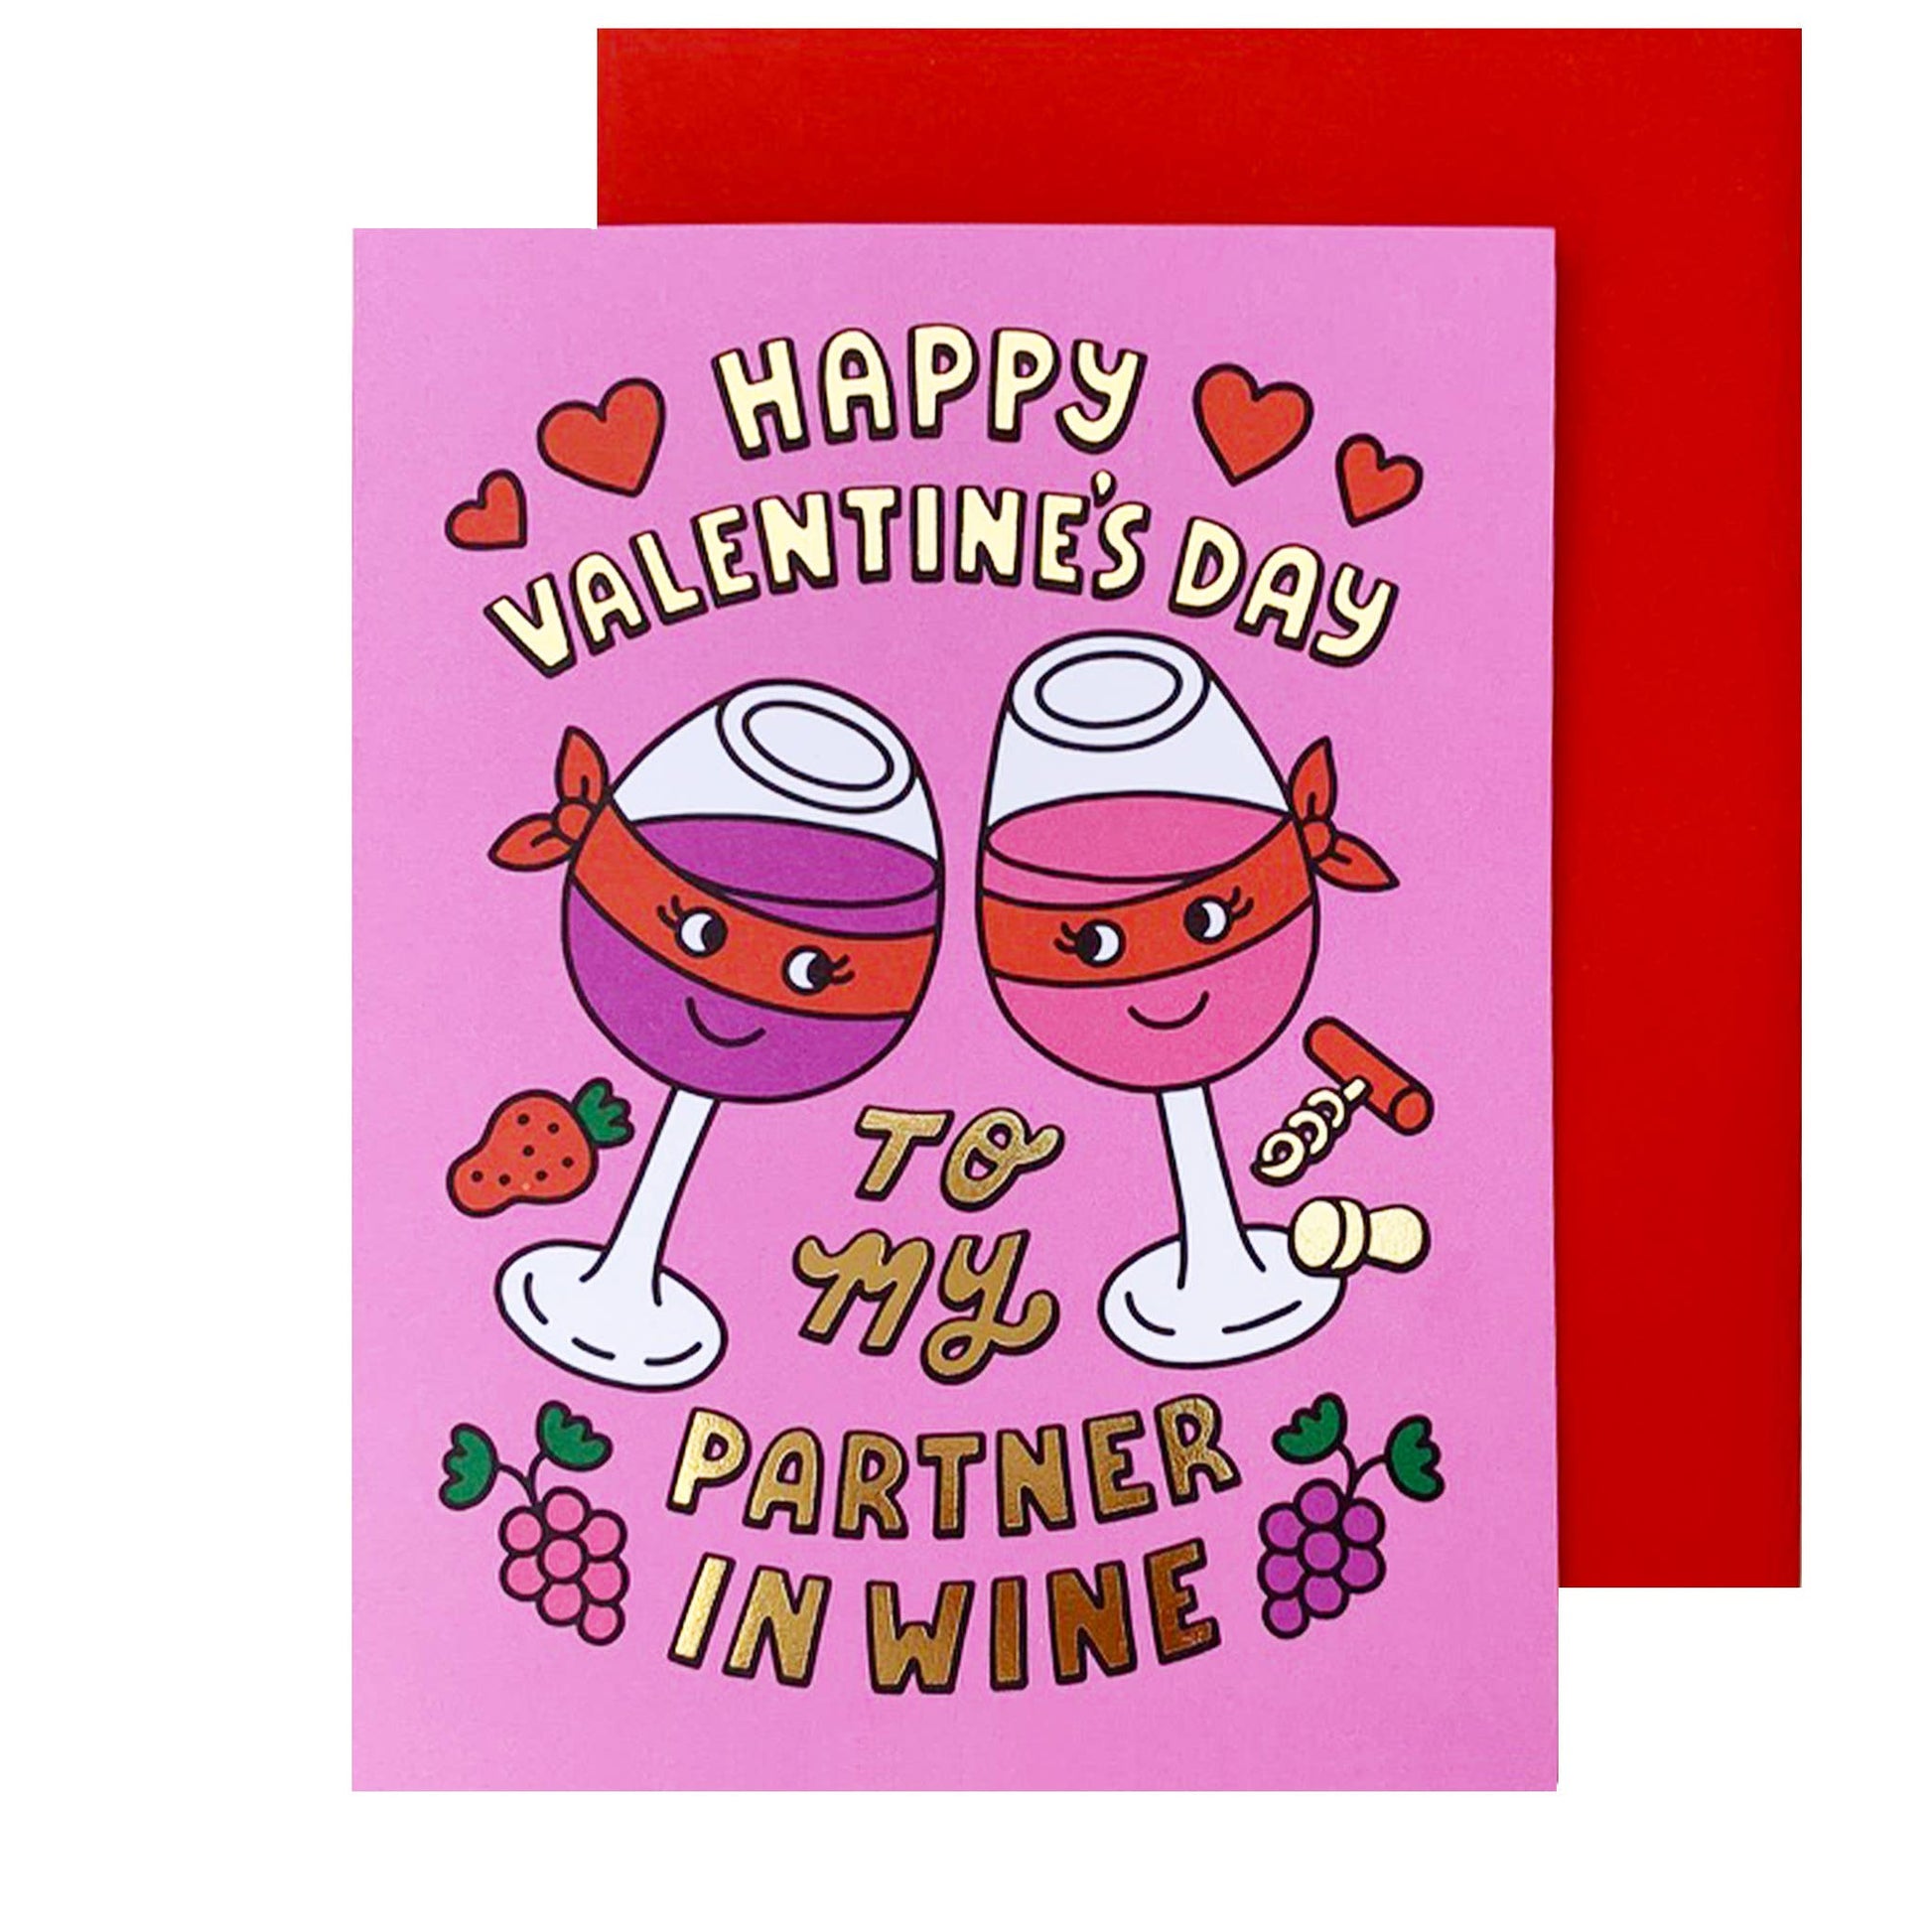 Partner in Wine Valentine's Day greeting card that reads "Happy Valentine's Day to my Partner in Wine"  